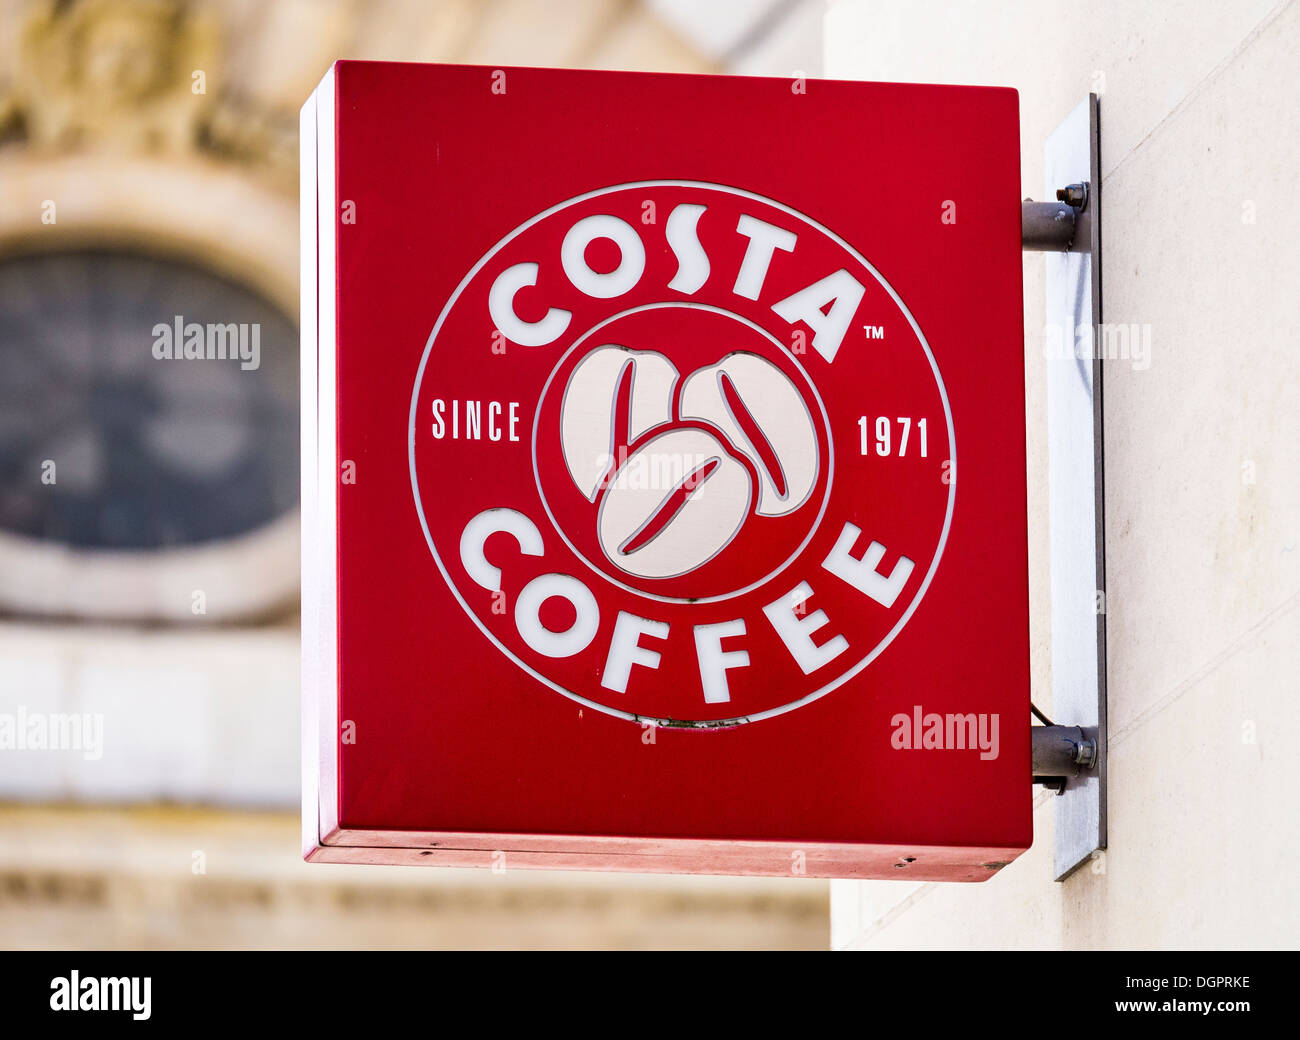 Costa Coffee Shop anmelden. Stockfoto